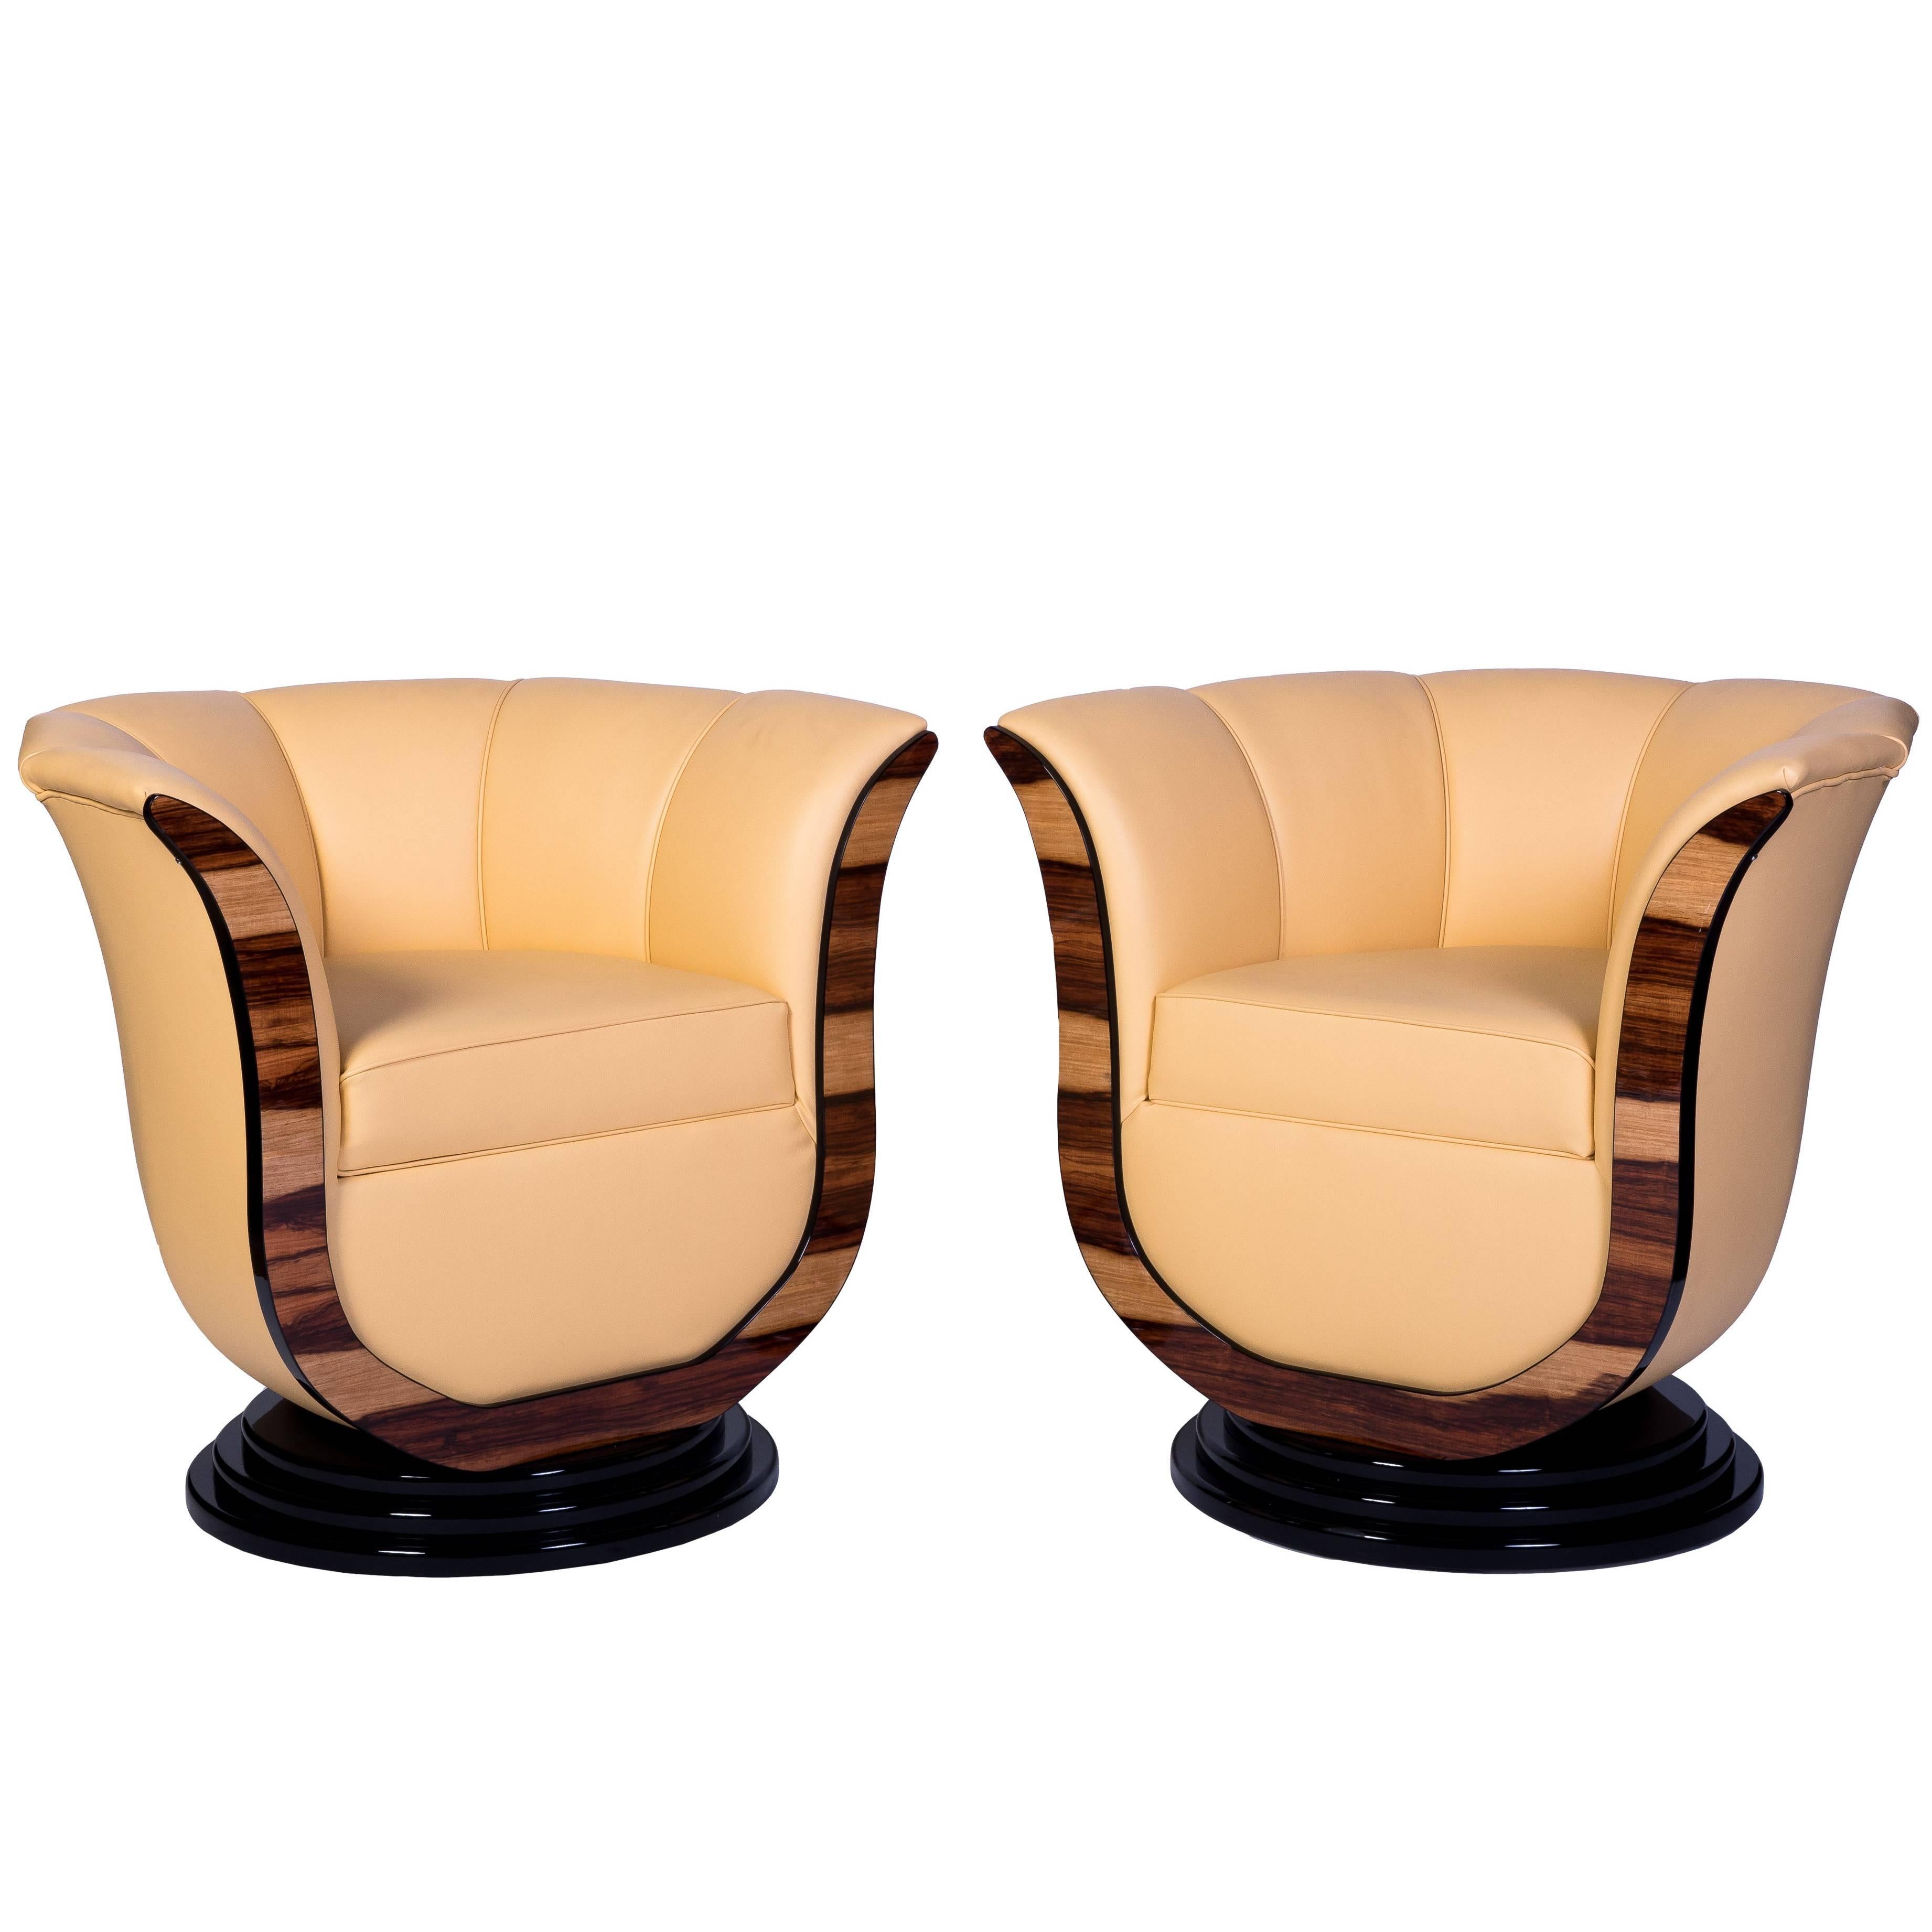 Superb Pair of Art Deco Style Tulip Armchairs